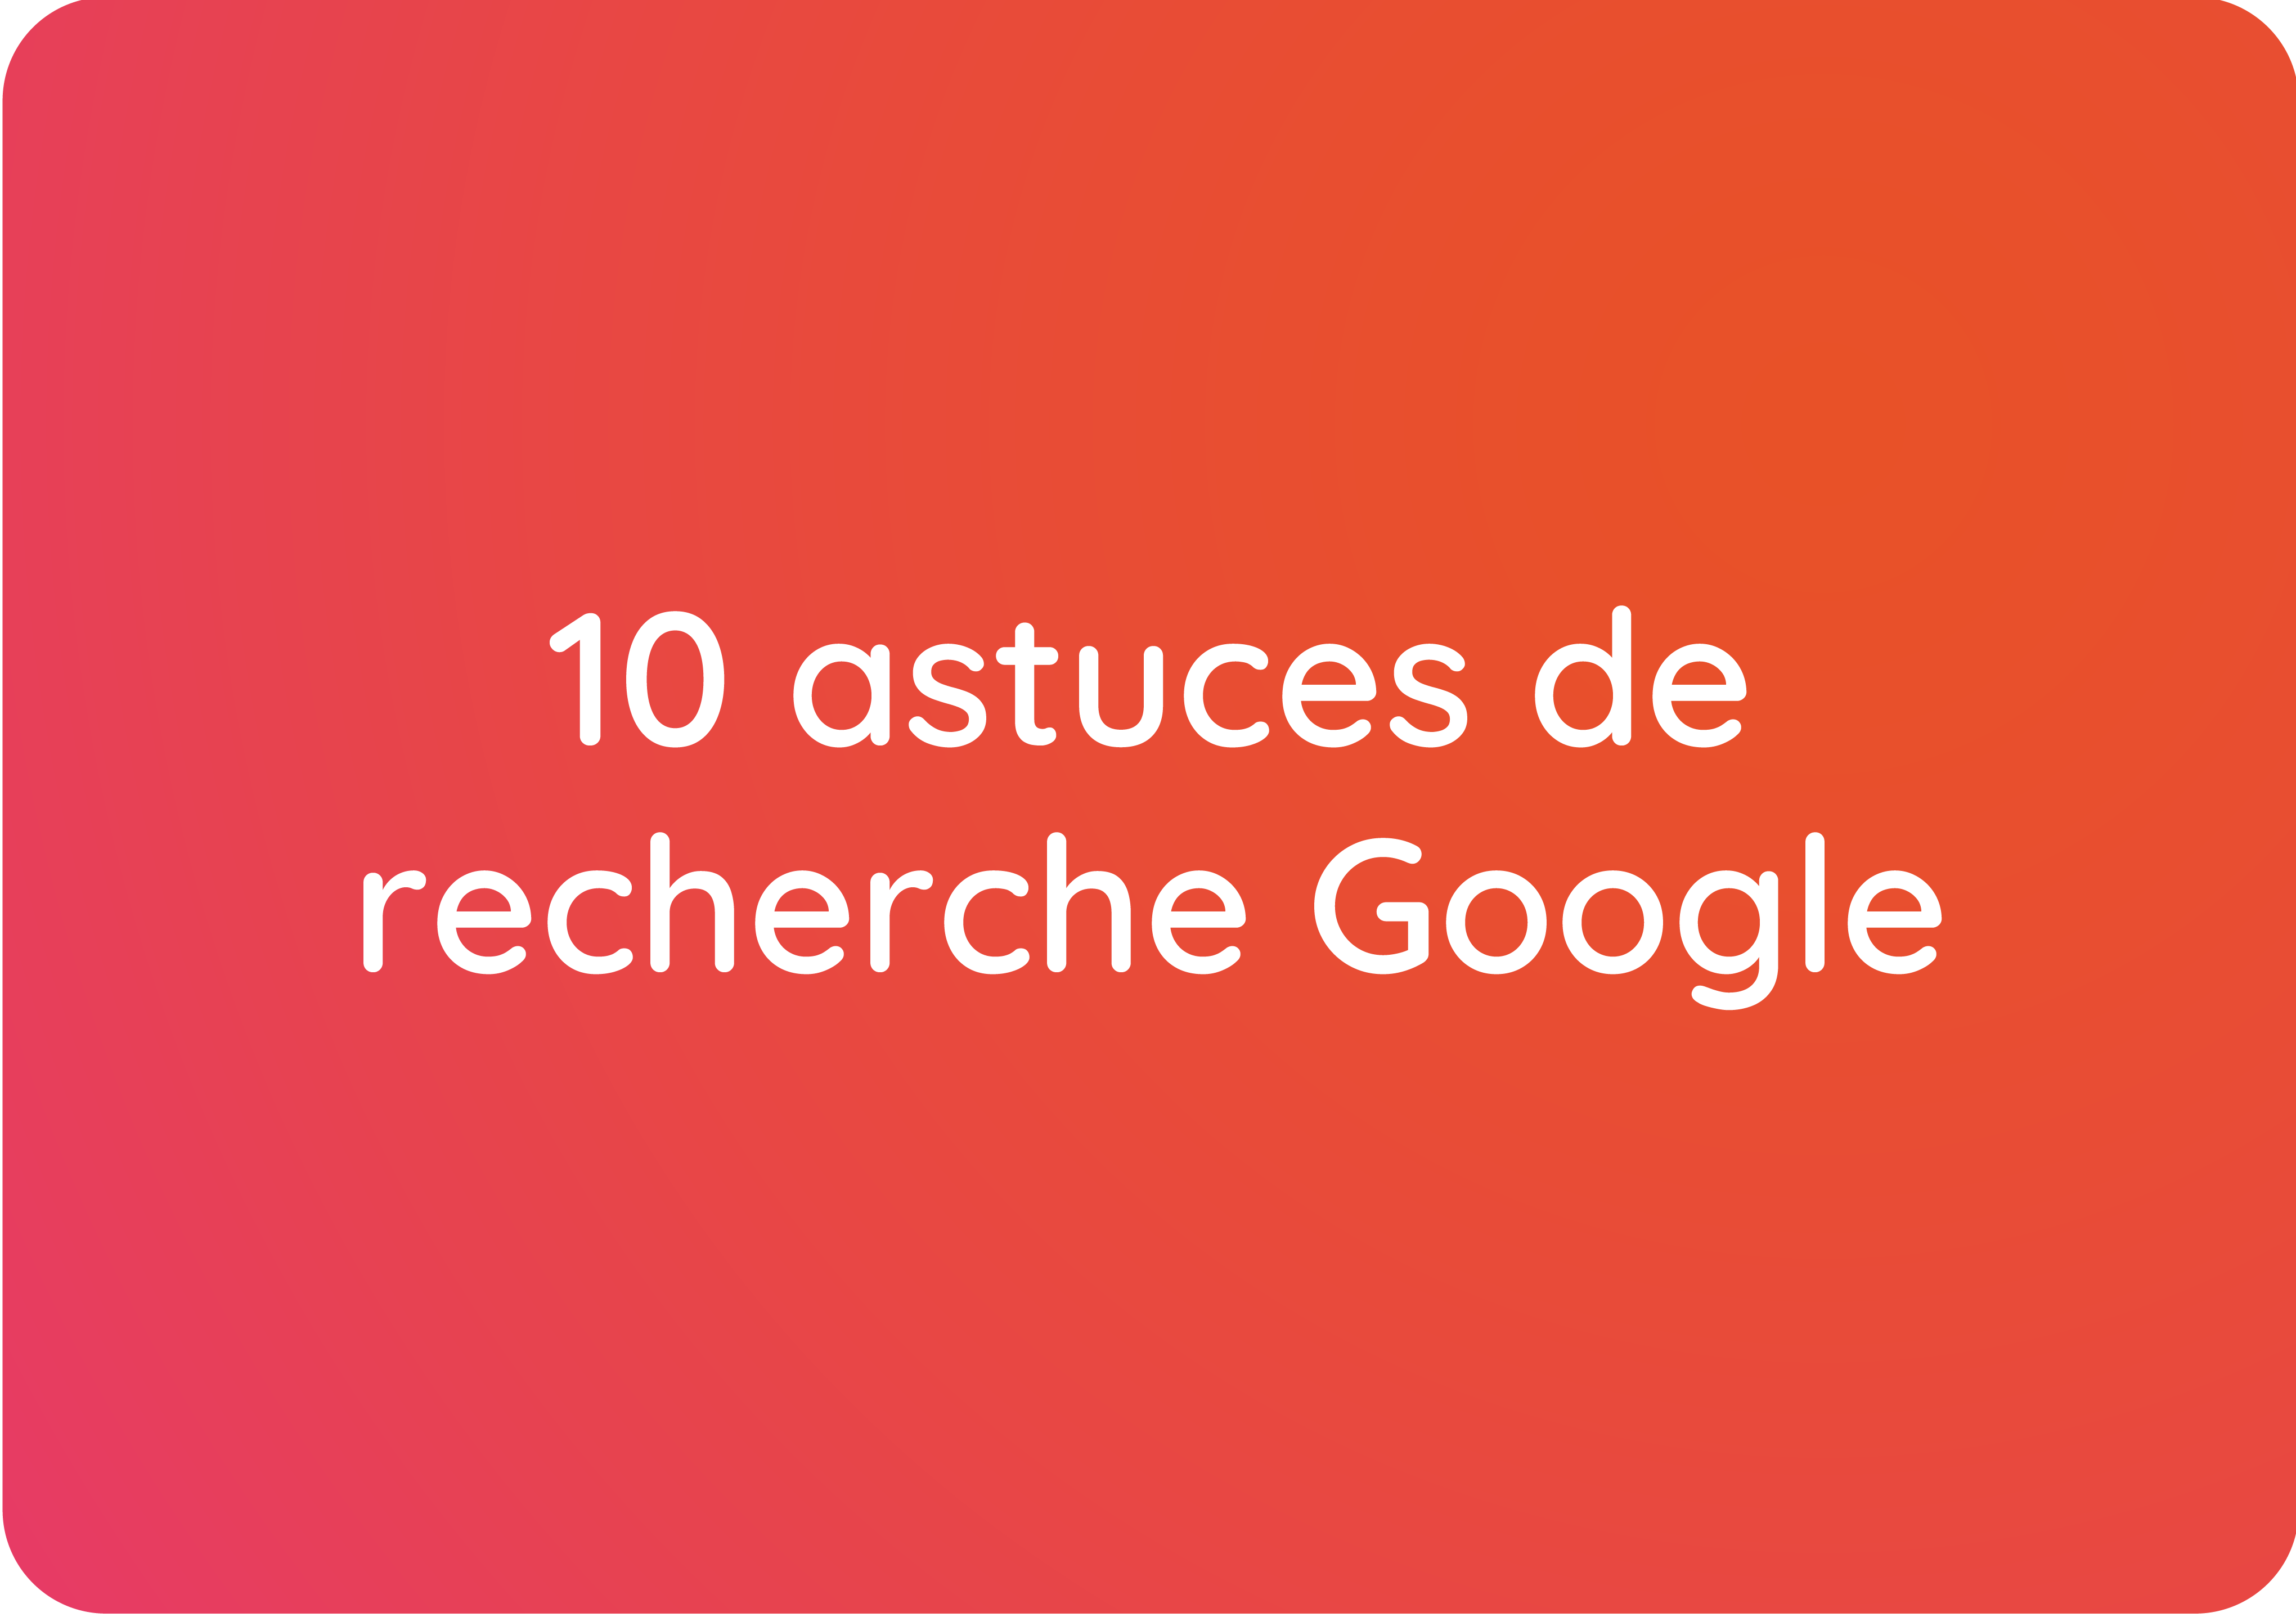 10 astuces de recherche Google